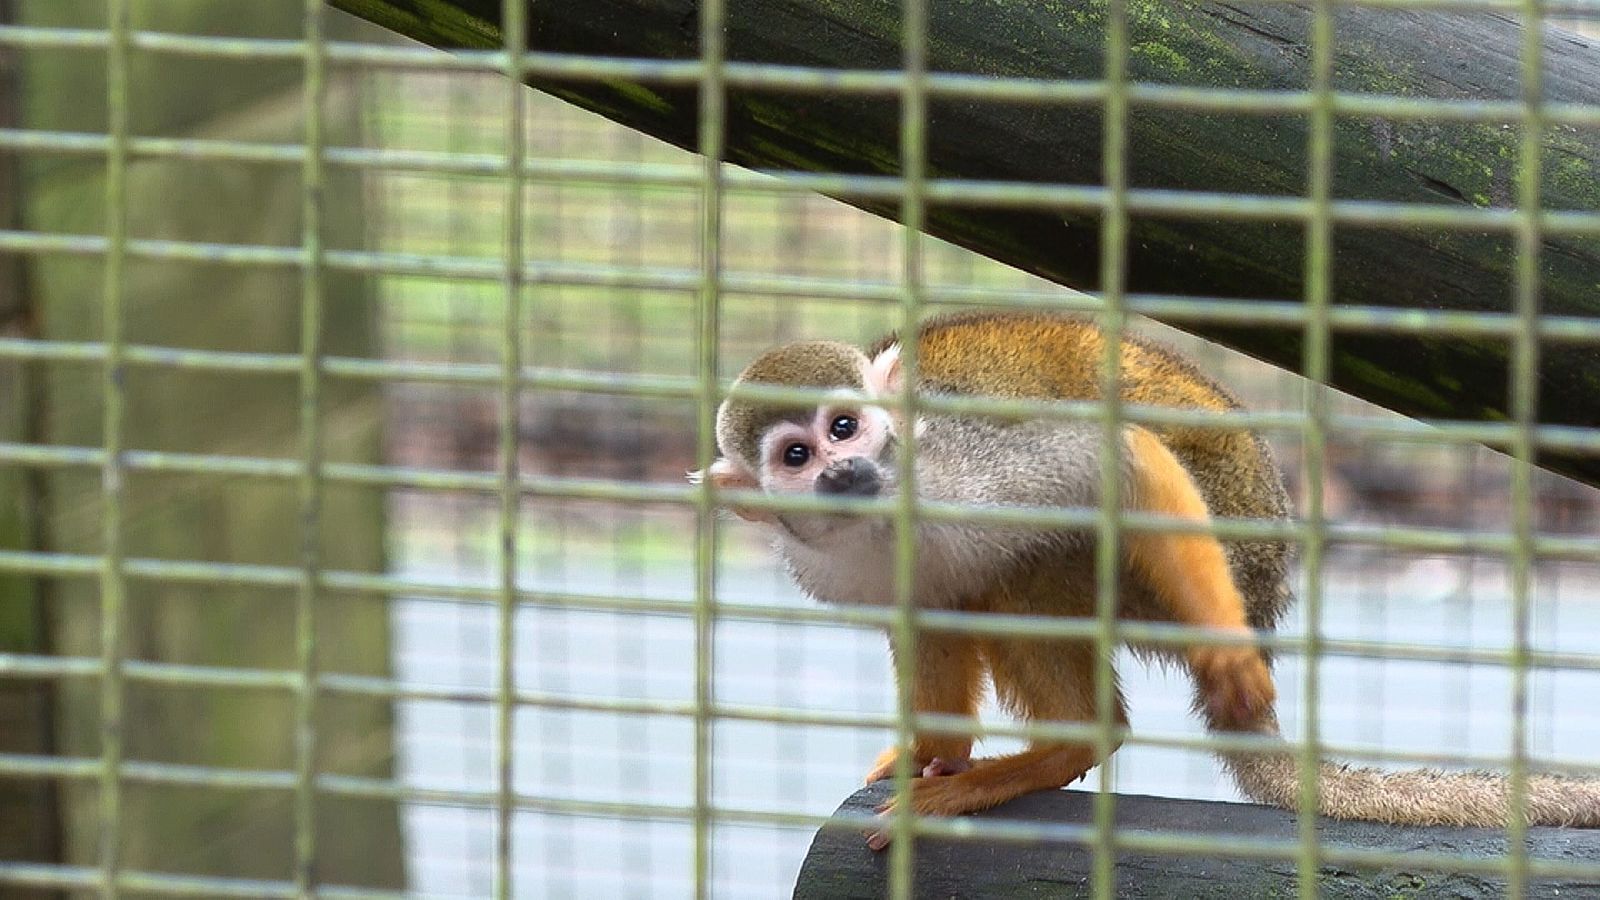 2 Monkeys Are Apparently Taken From Dallas Zoo in Latest Bizarre